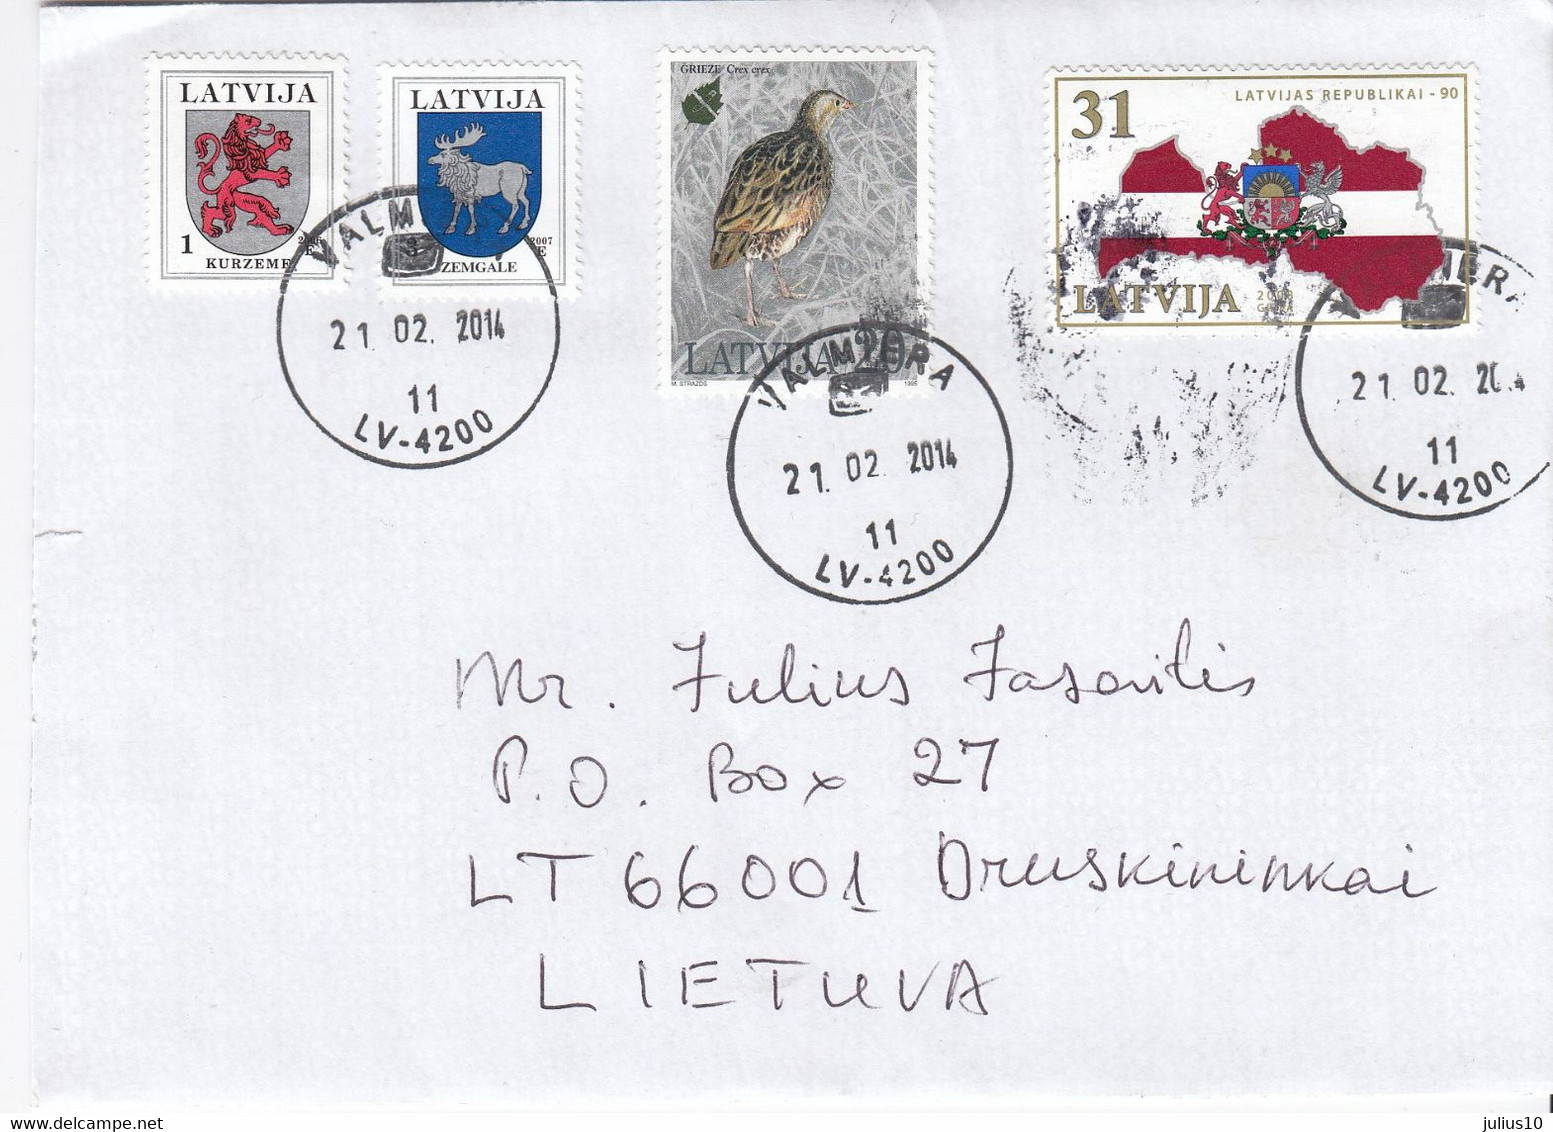 LATVIA 2014 Cover Sent To Lithuania Druskininkai #27143 - Latvia